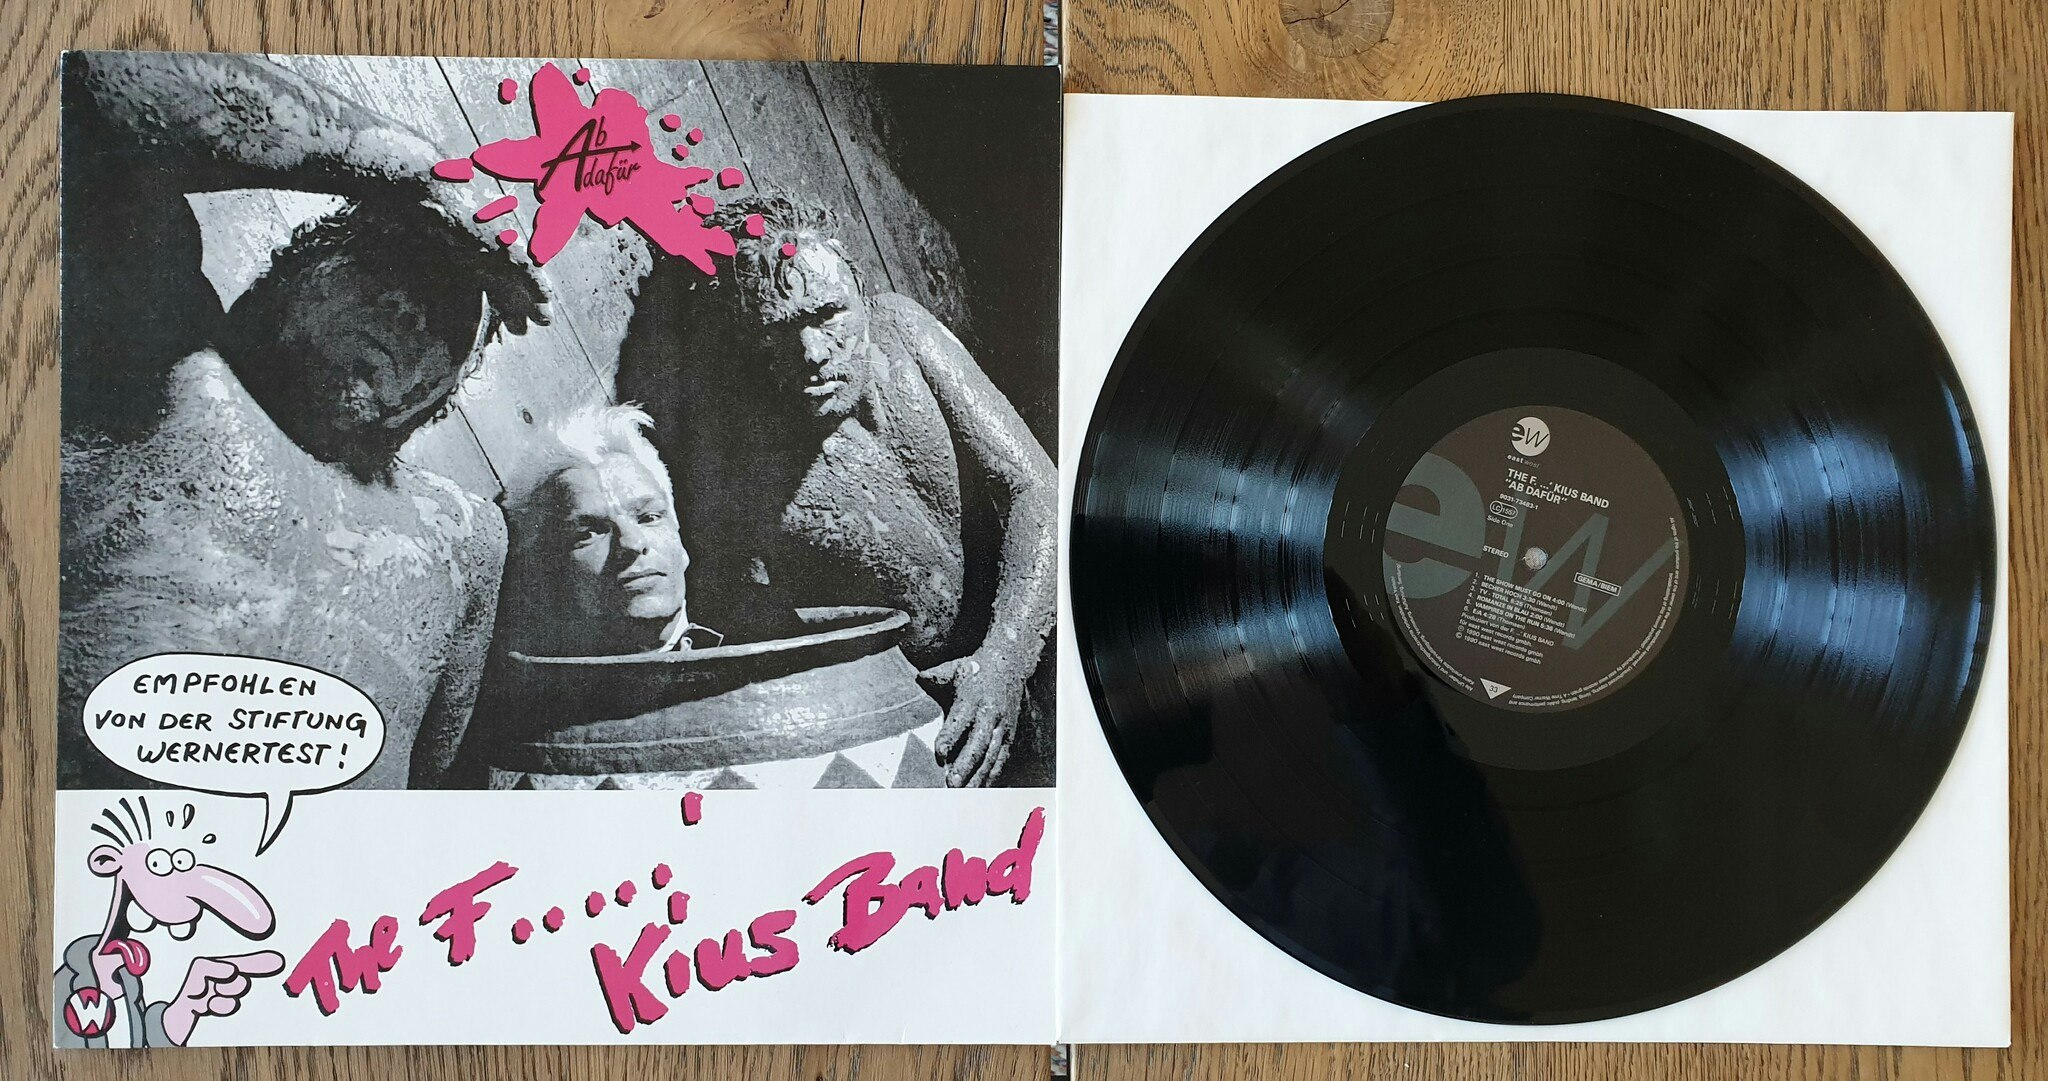 The F..kius Band, Ab dafür. Vinyl LP